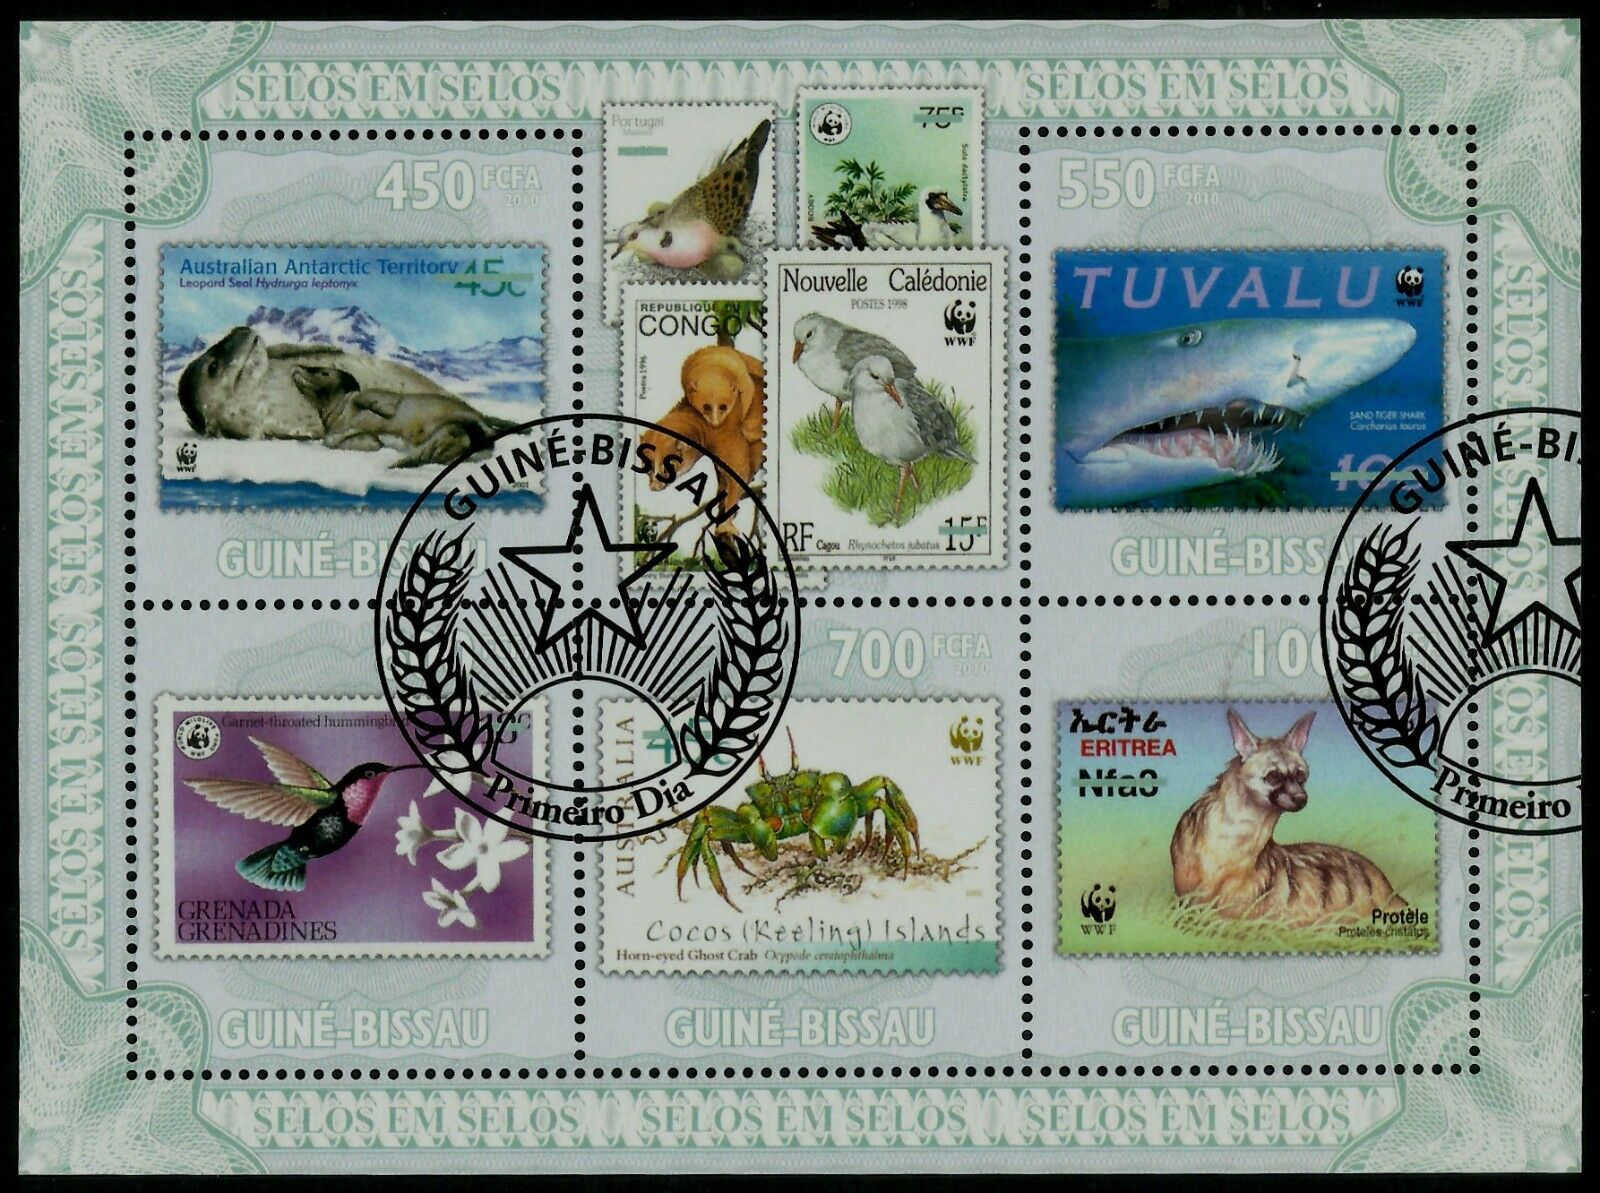 Tuvalu, Stamp Over Stamp, Fauna, Cto, Mnh, Year 2010